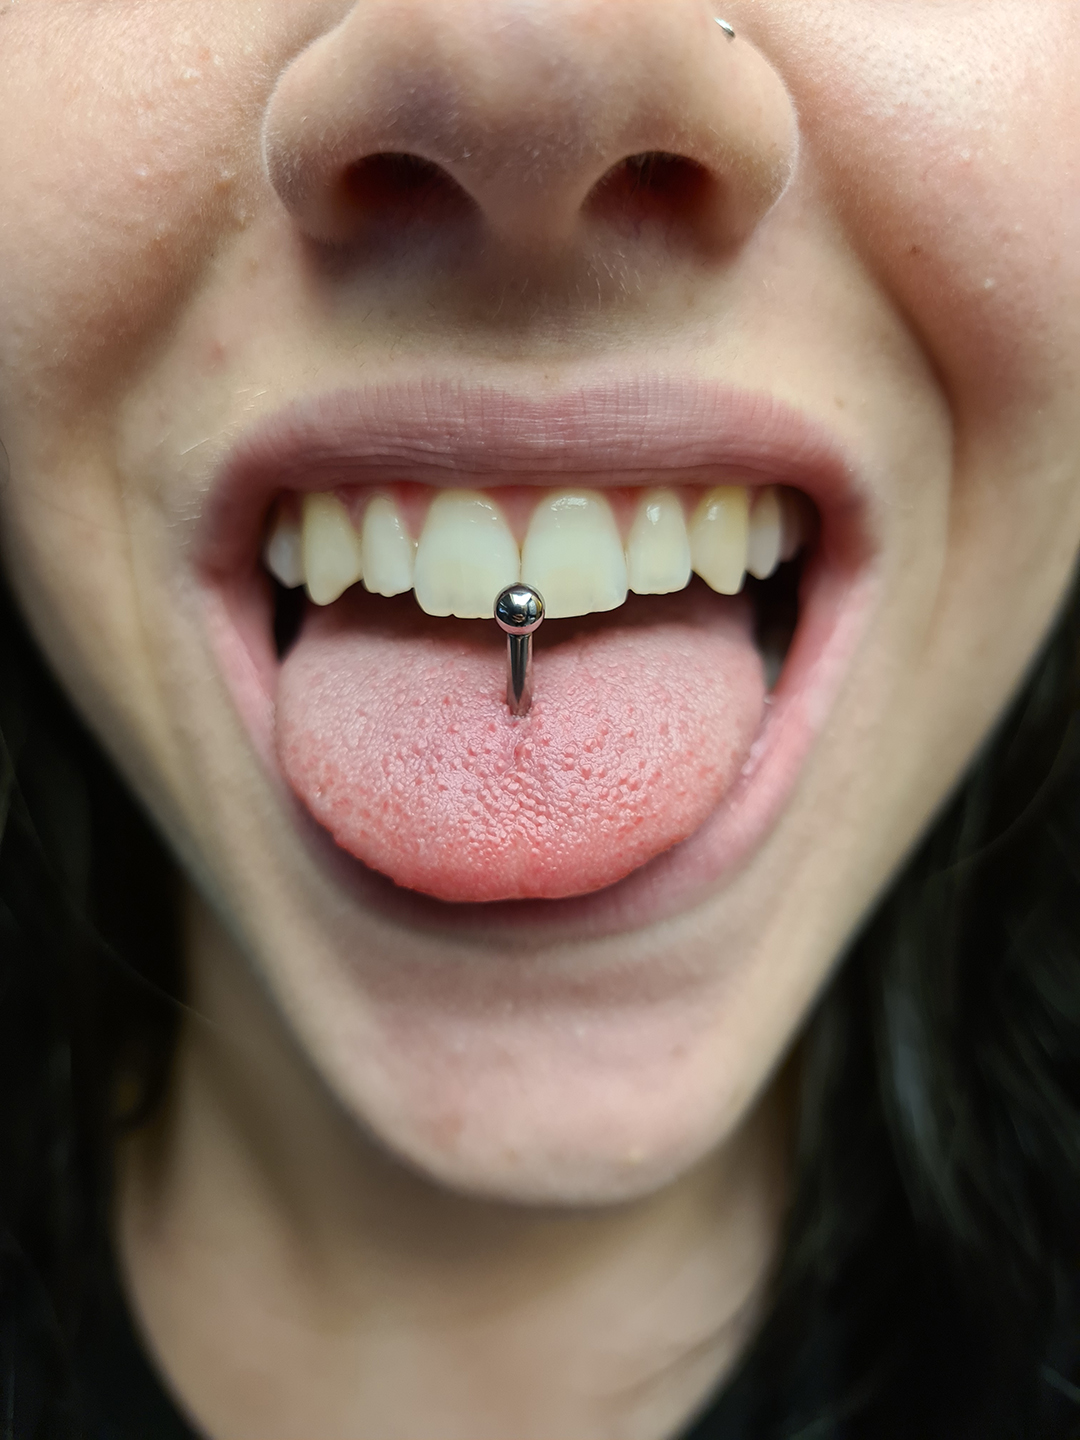 Classic tongue piercing